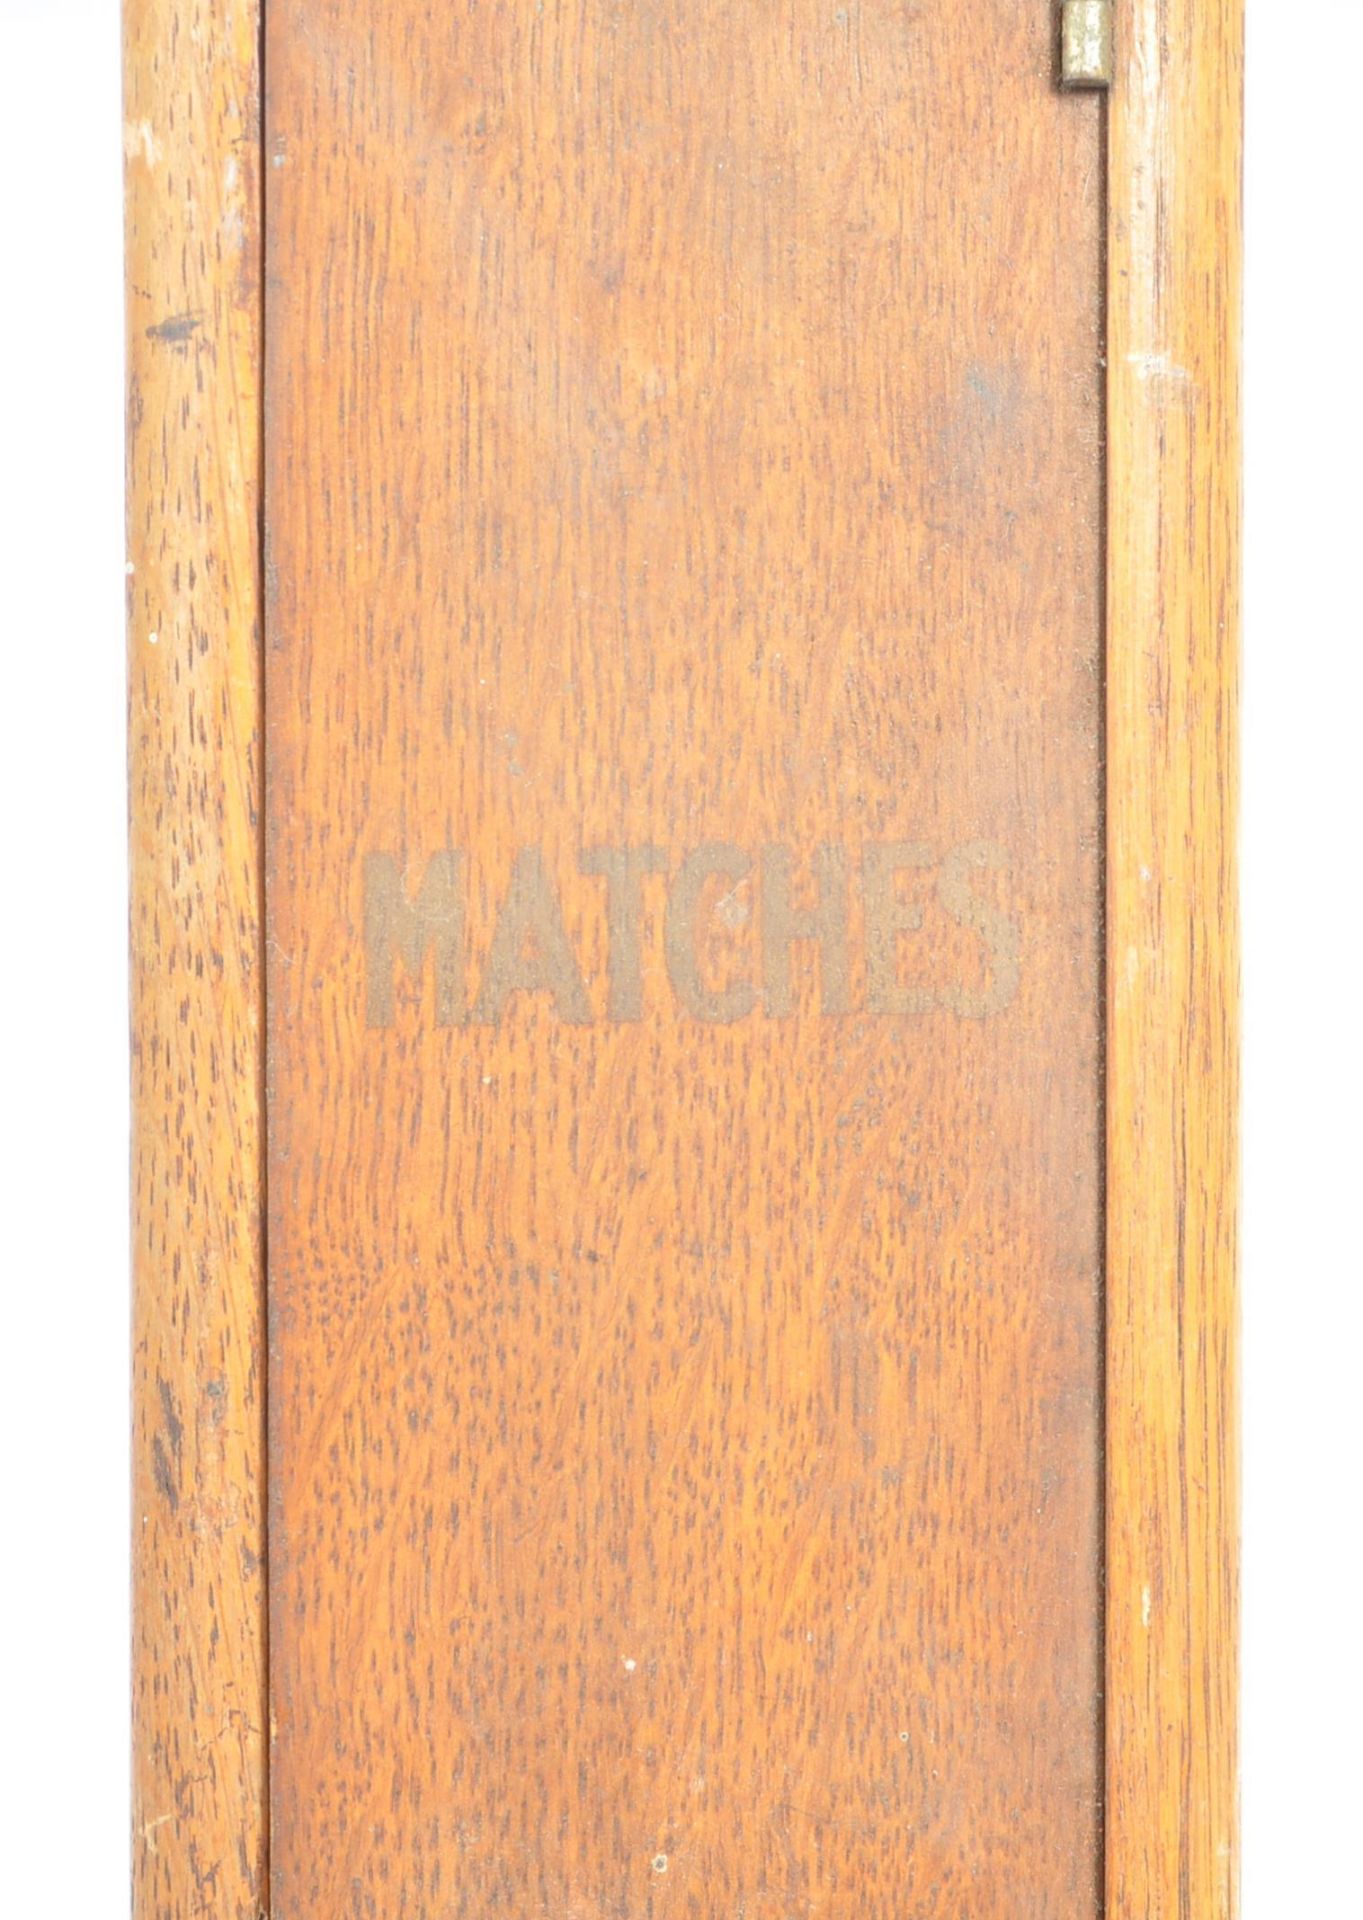 EARLY 20TH CENTURY OAK WALL MOUNTED MATCH BOX DISPENSER - Image 4 of 8